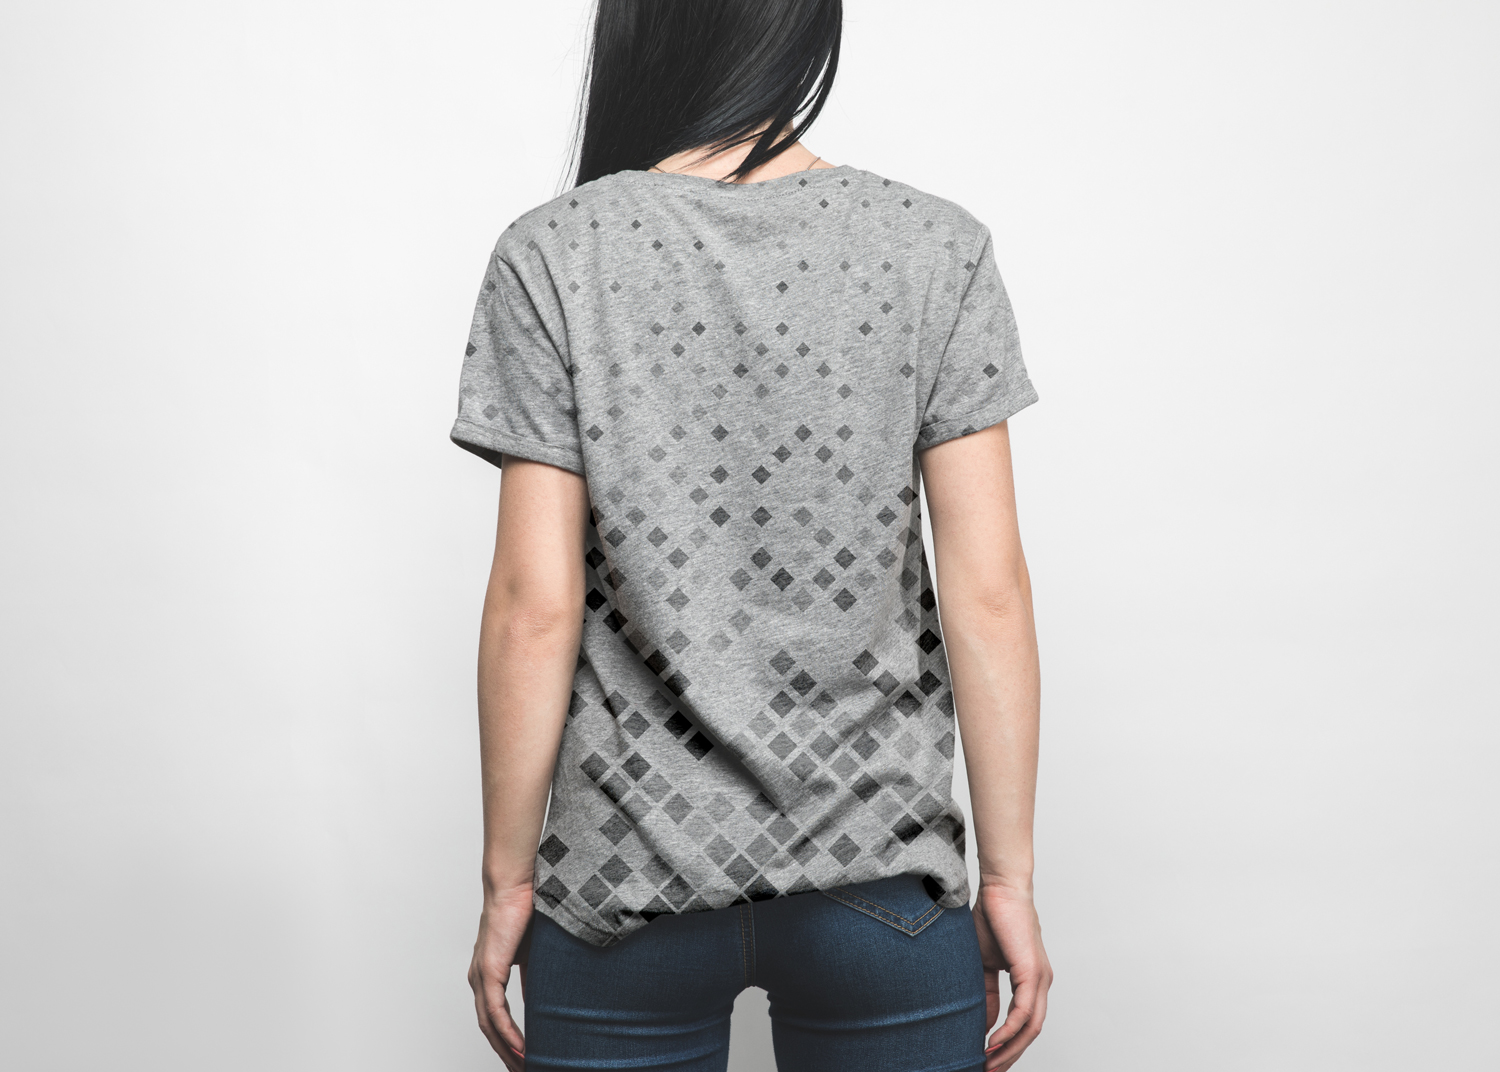 Back T Shirt Mockup For Woman Psd Mockup Template